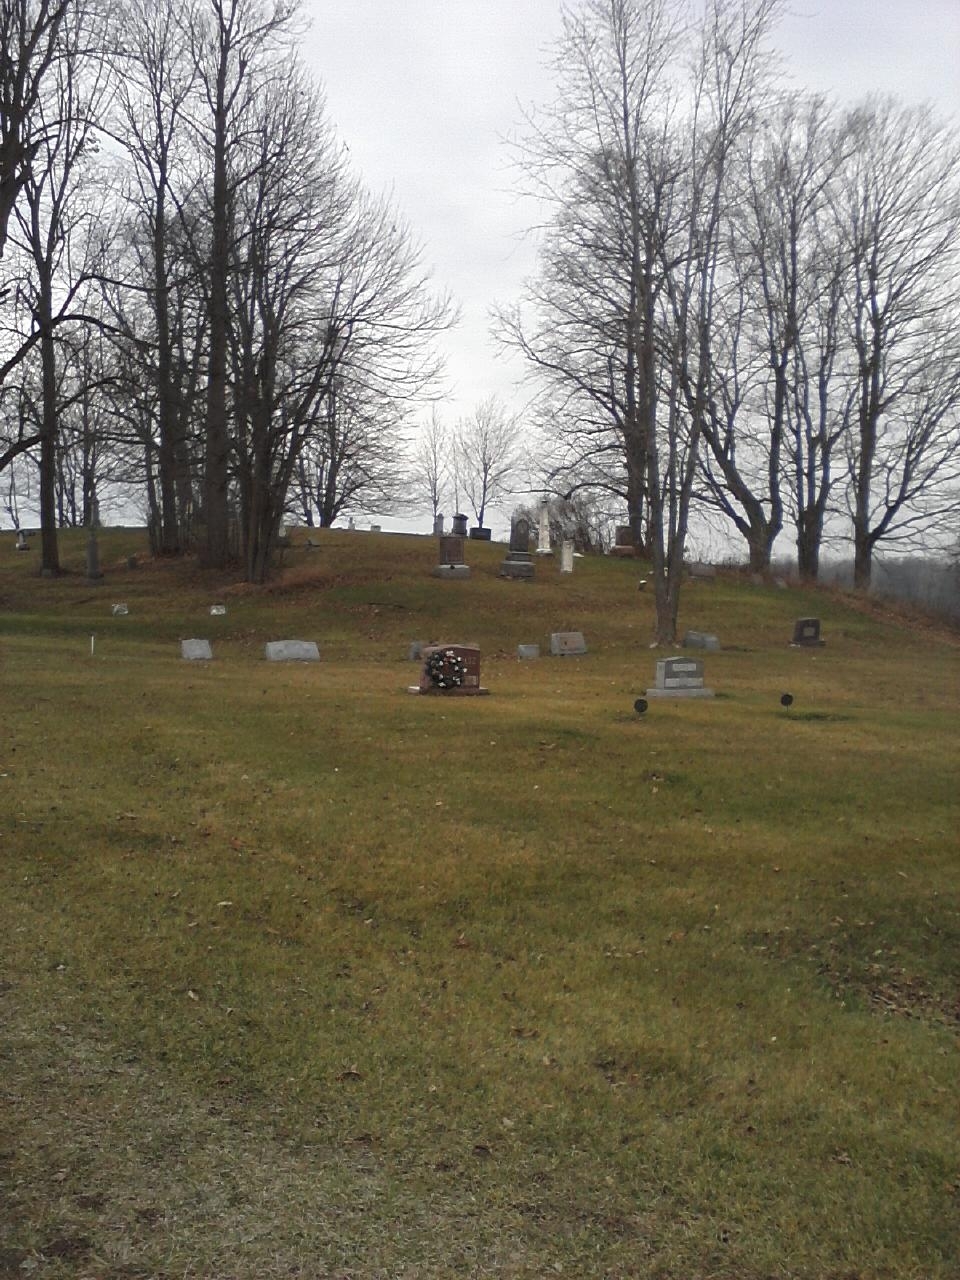 Zander Cemetery